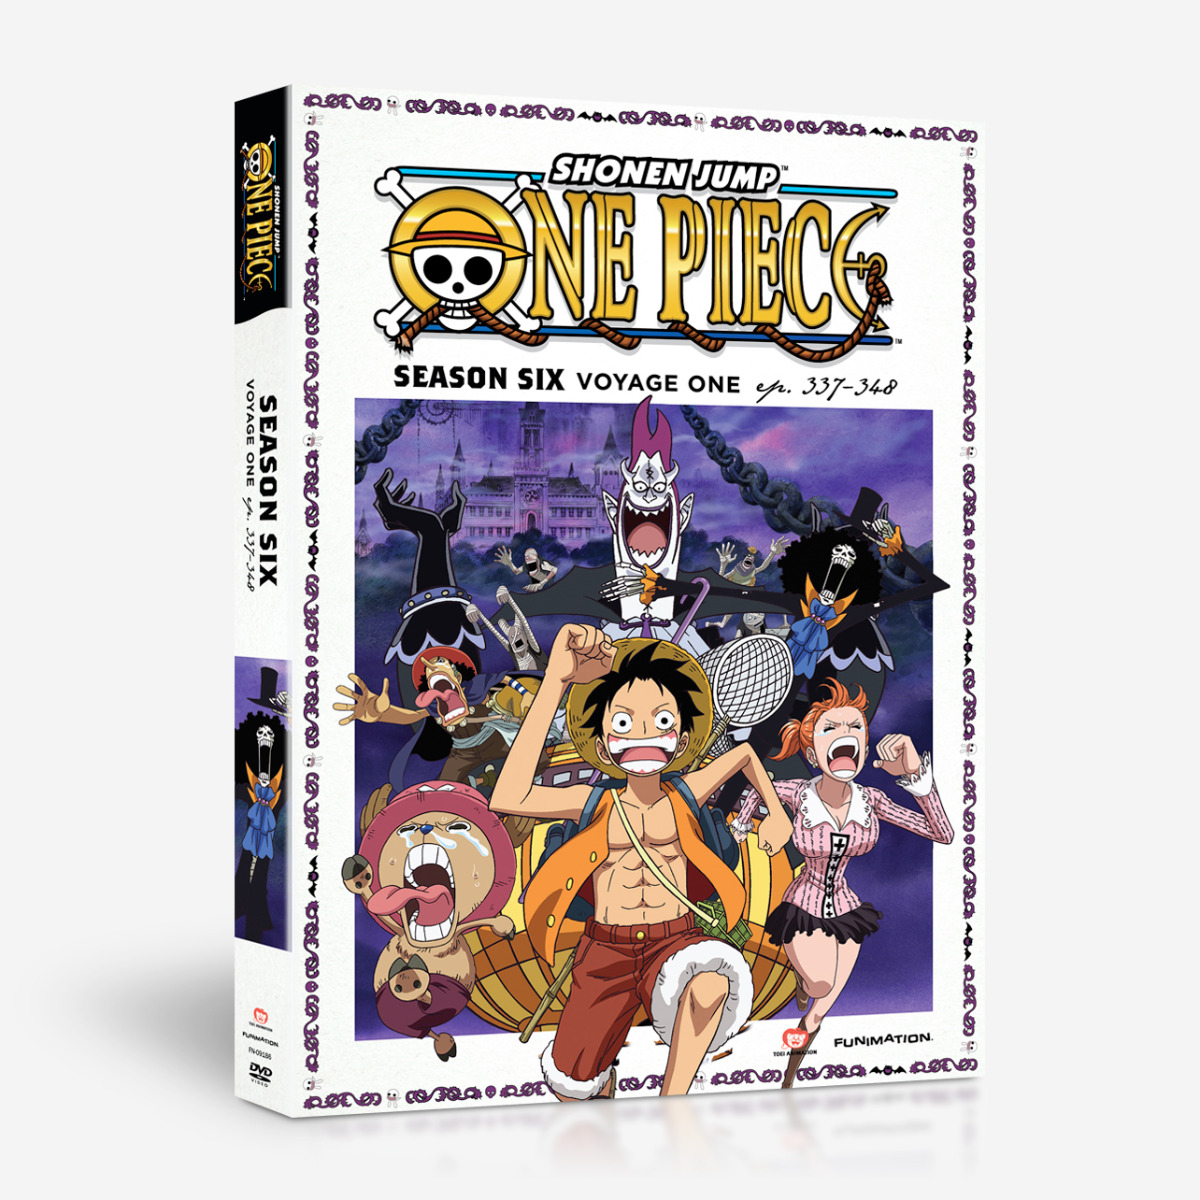 One Piece - Voyage 1 - Season 6 - DVD image count 0